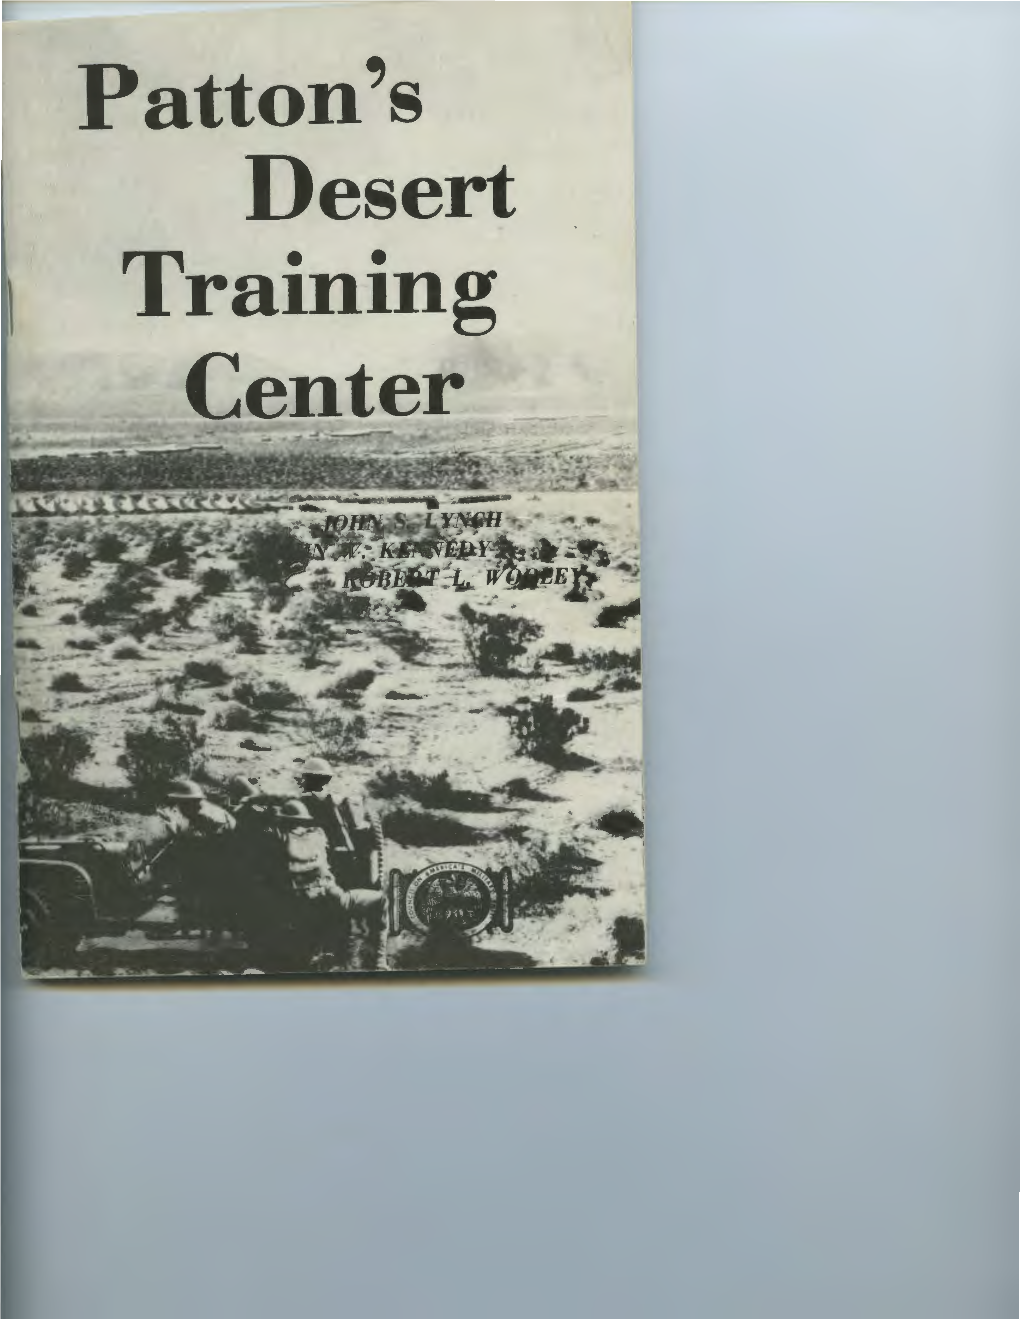 Patton's Desert Training Center ·~~:::1:~~ "( ;;I ~ ~ Patton's Desert Training Center